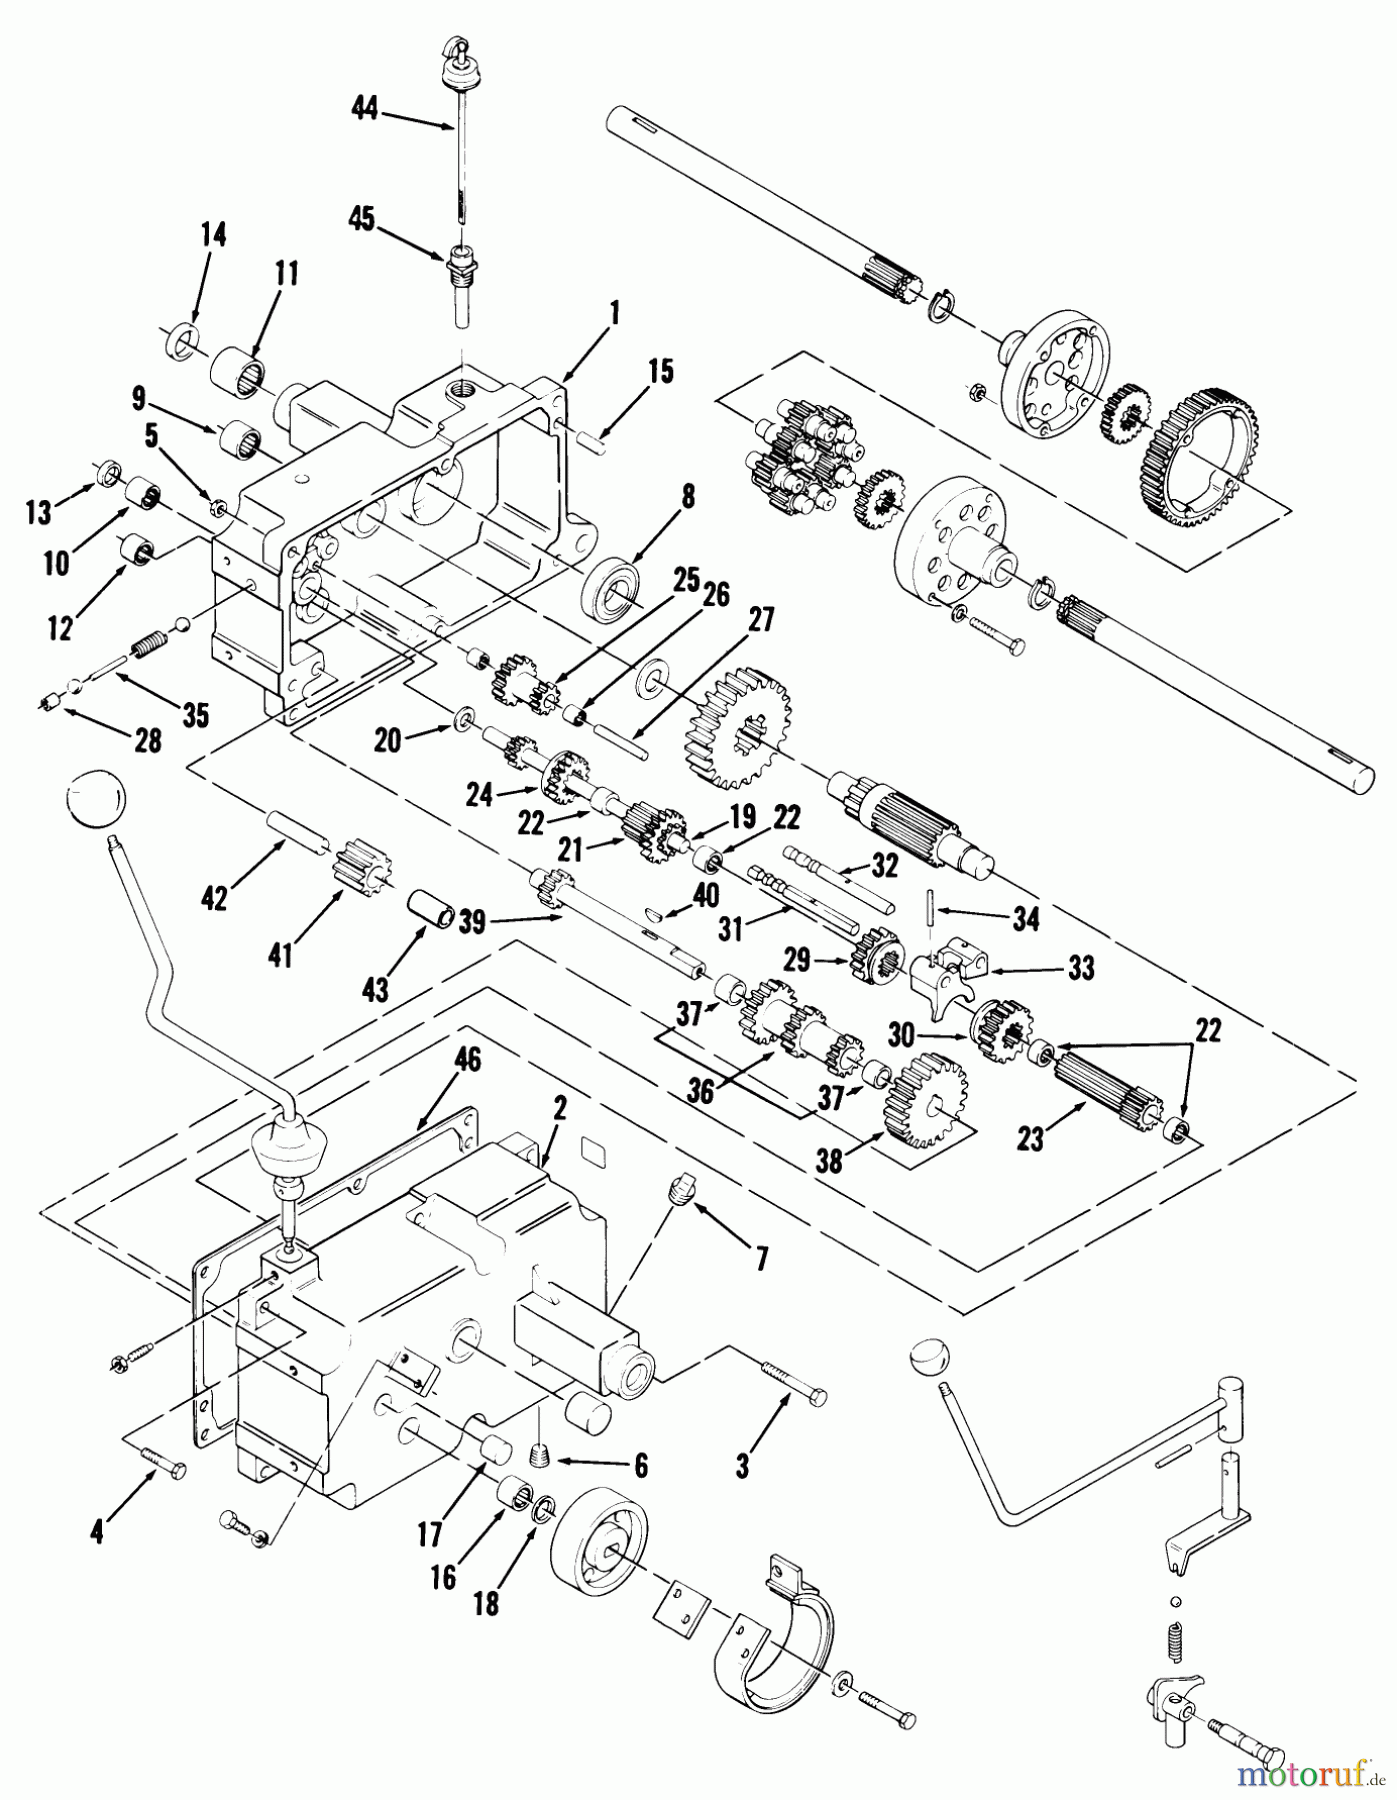  Toro Neu Mowers, Lawn & Garden Tractor Seite 1 01-14KS01 (C-145) - Toro C-145 Automatic Tractor, 1980 MECHANICAL TRANSMISSION-8 SPEED #1